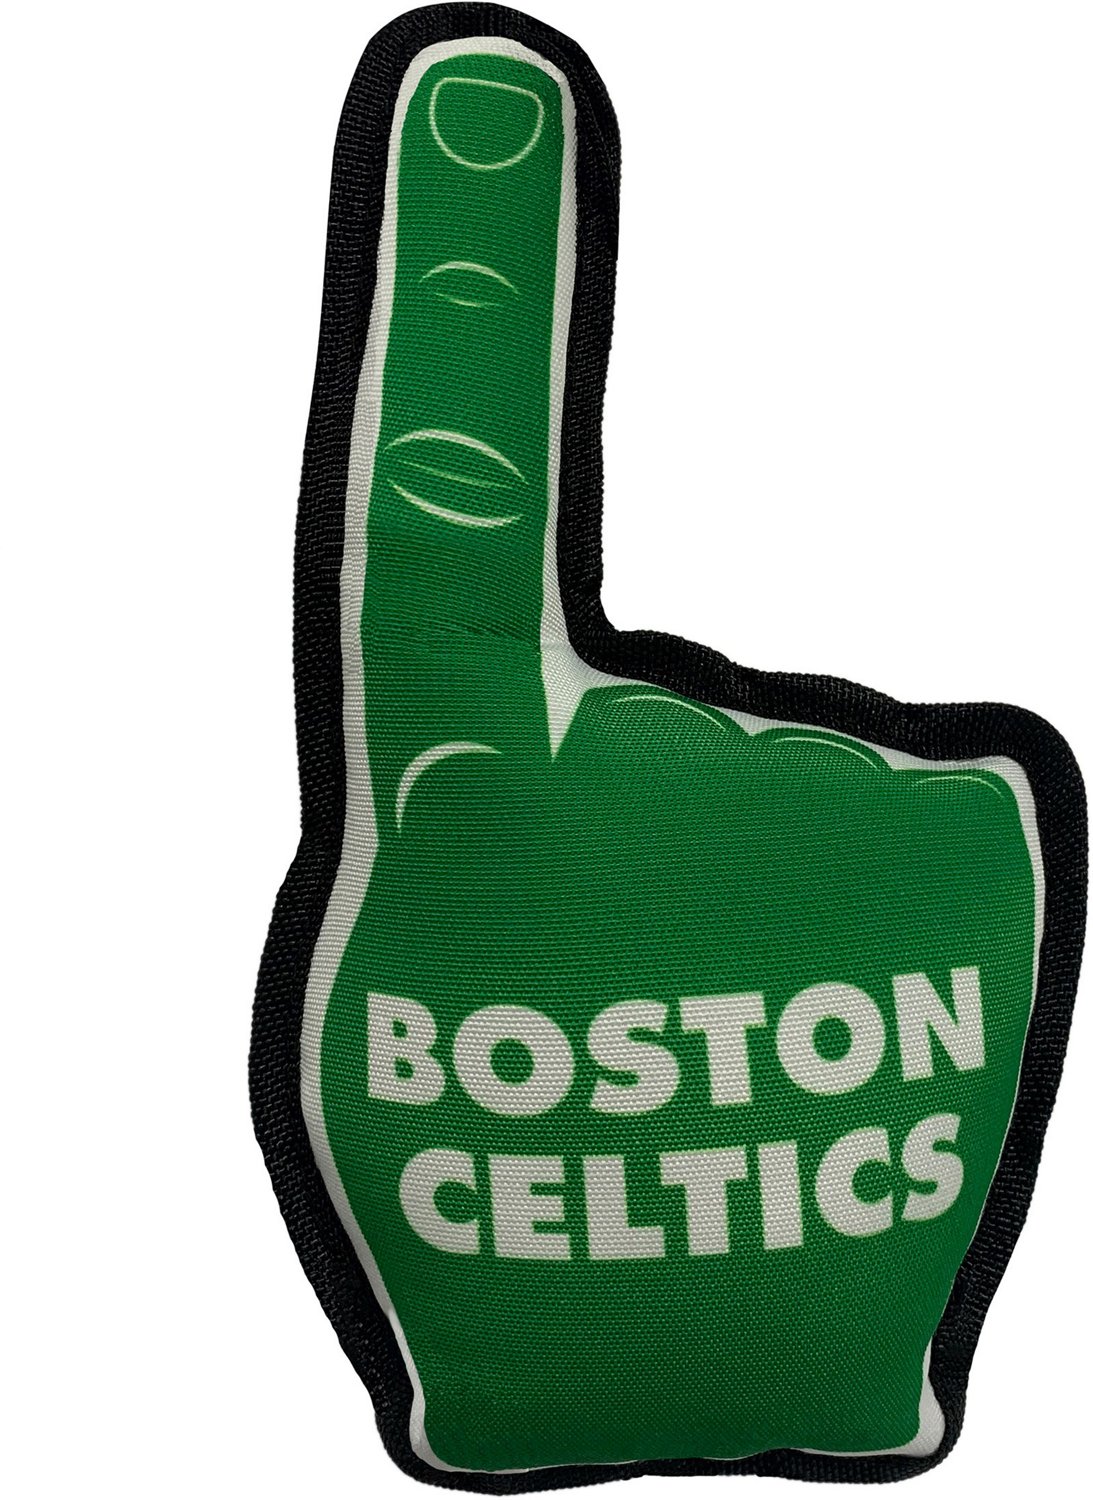 Pets First Boston Celtics Pink Jersey, X-Small : : Pet